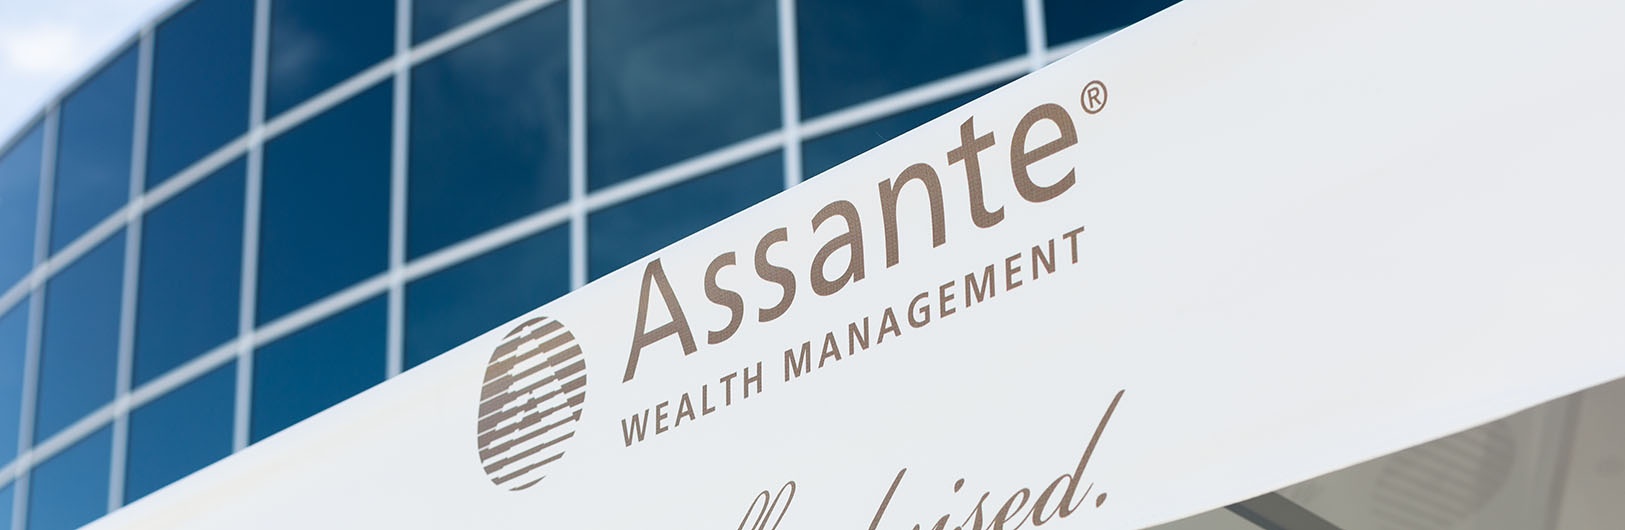 assante-wealth-management-header.jpg